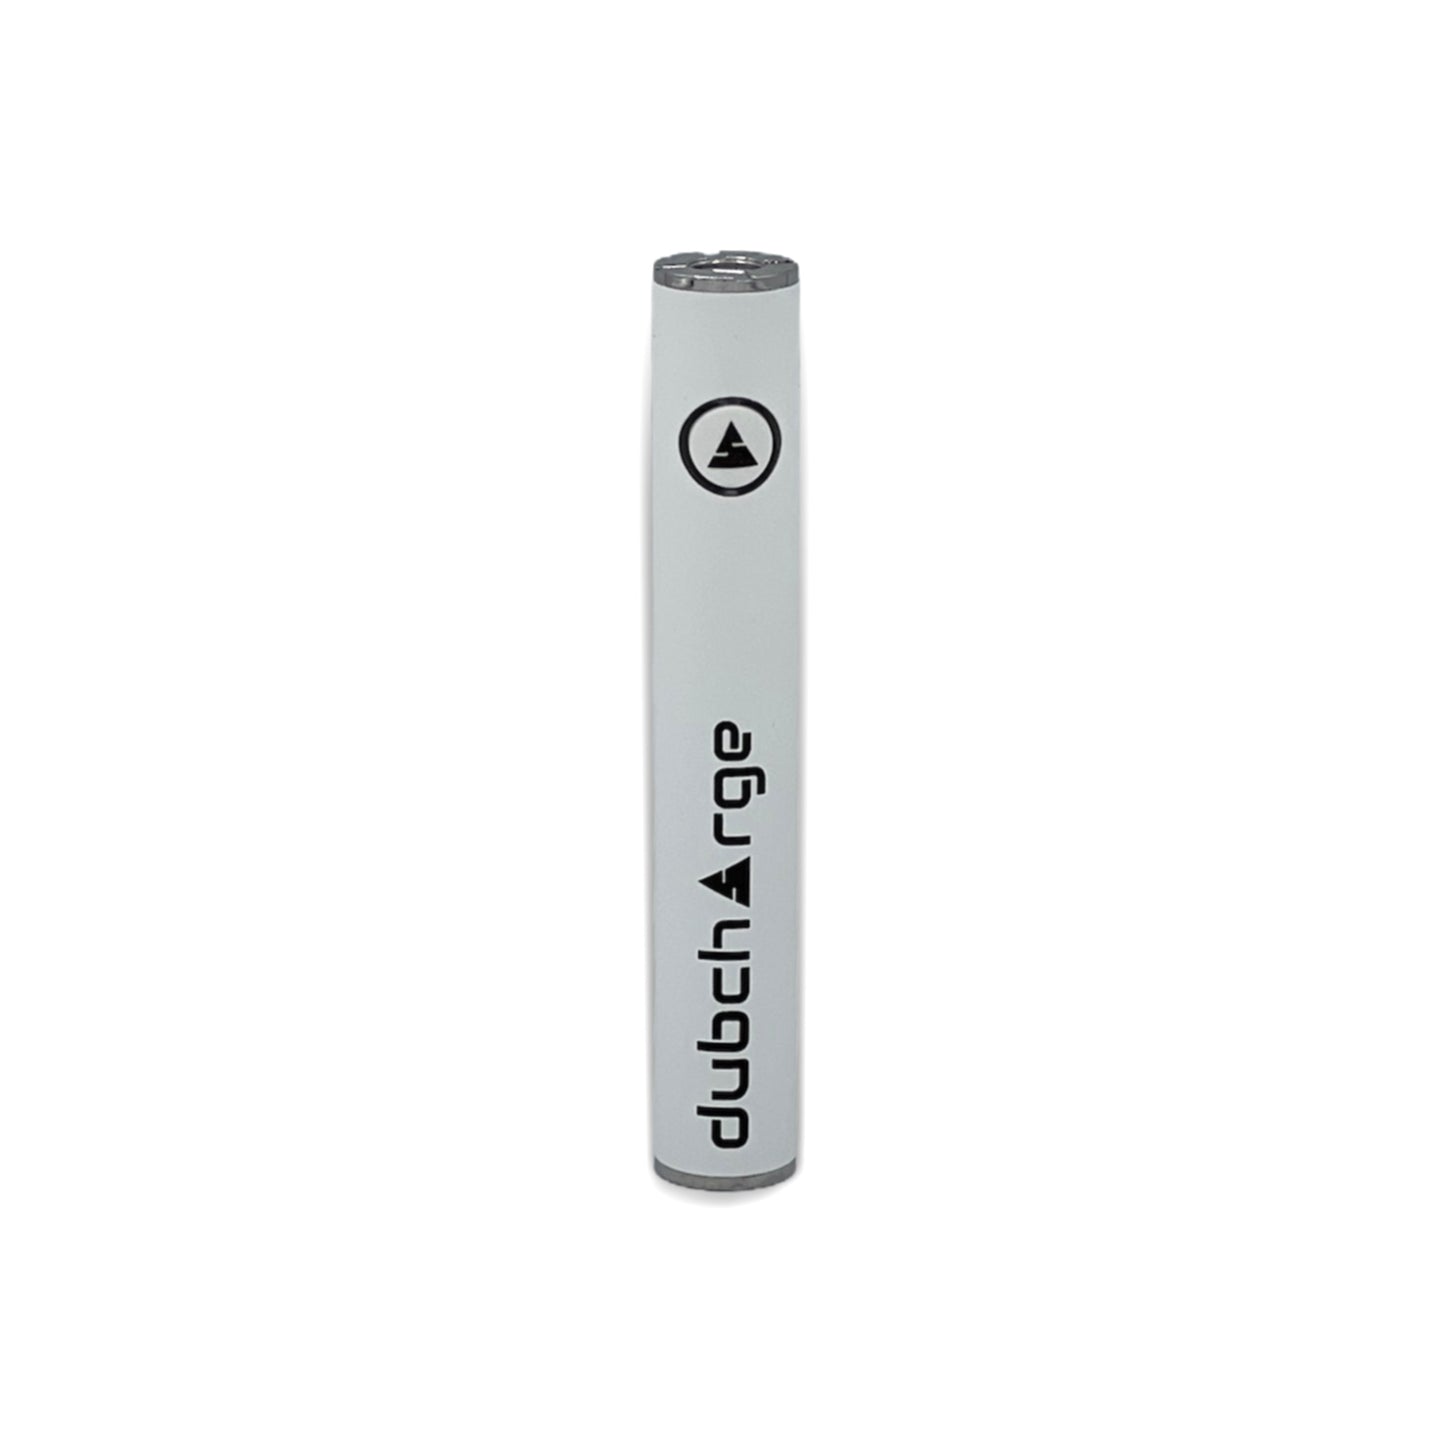 Yin & Yang Bundle: White & Black DubCharge V3 510 Thread Batteries